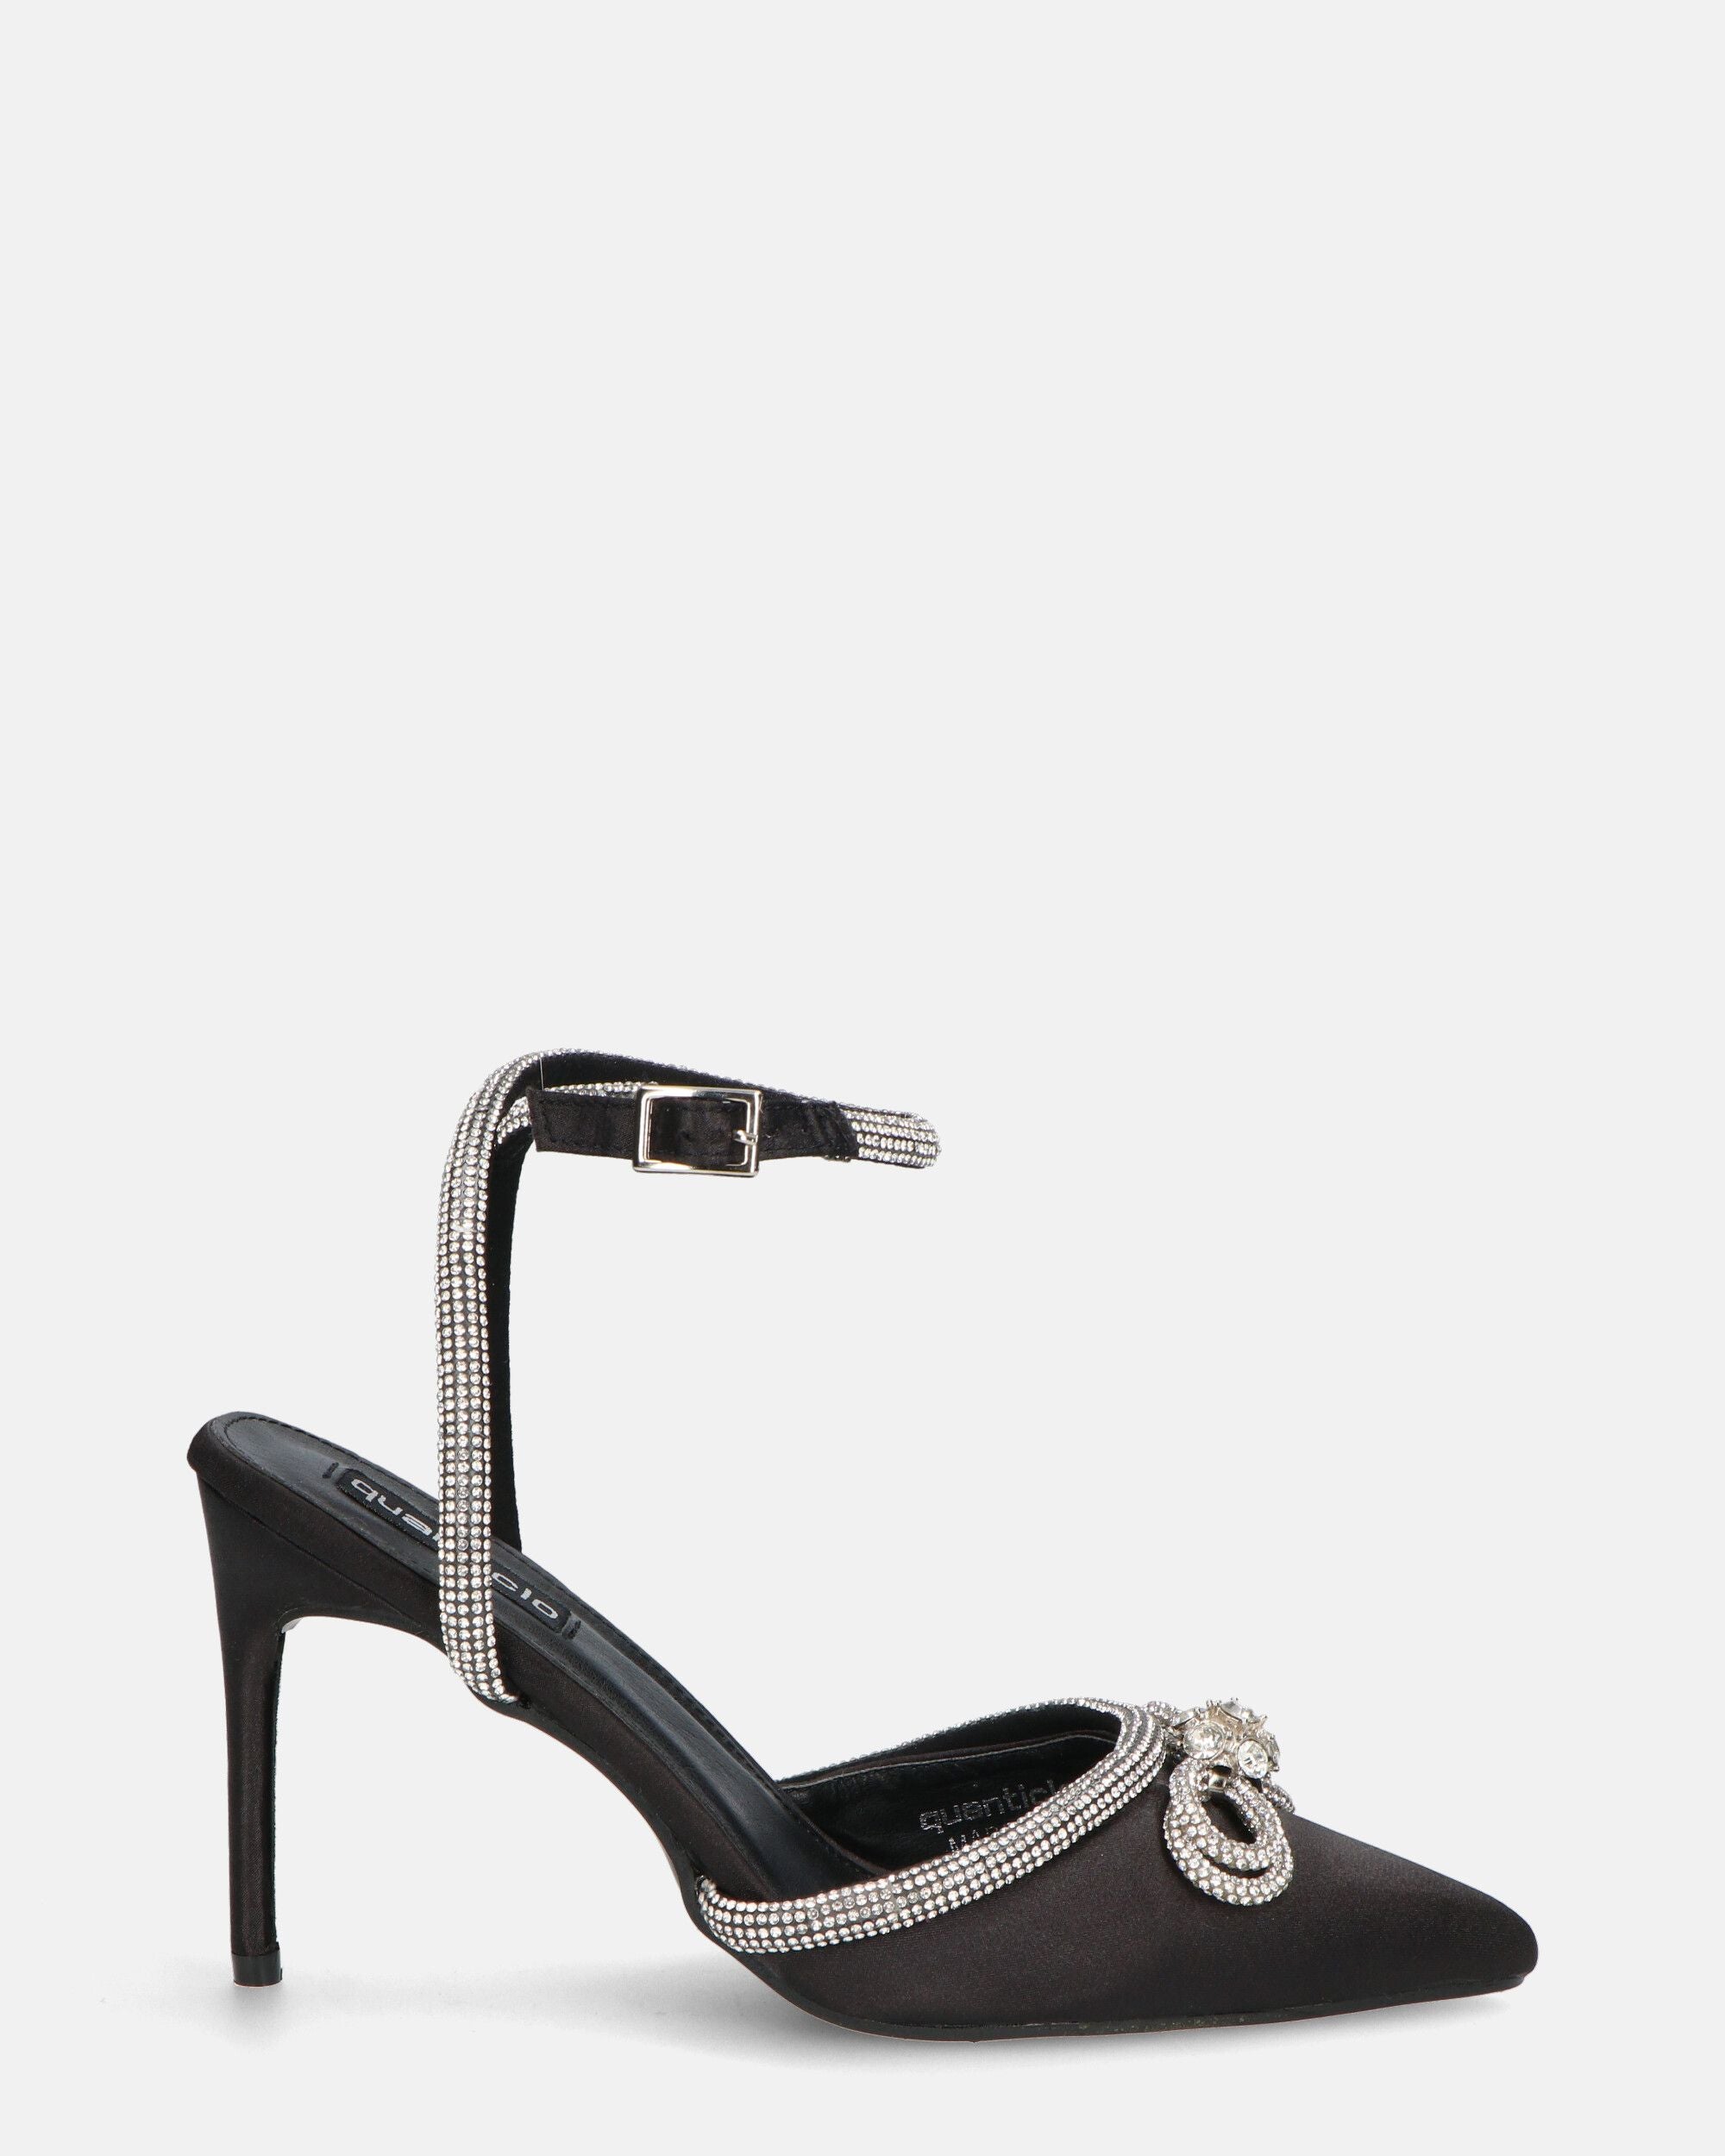 MARETA - black heeled shoes with glitter bow